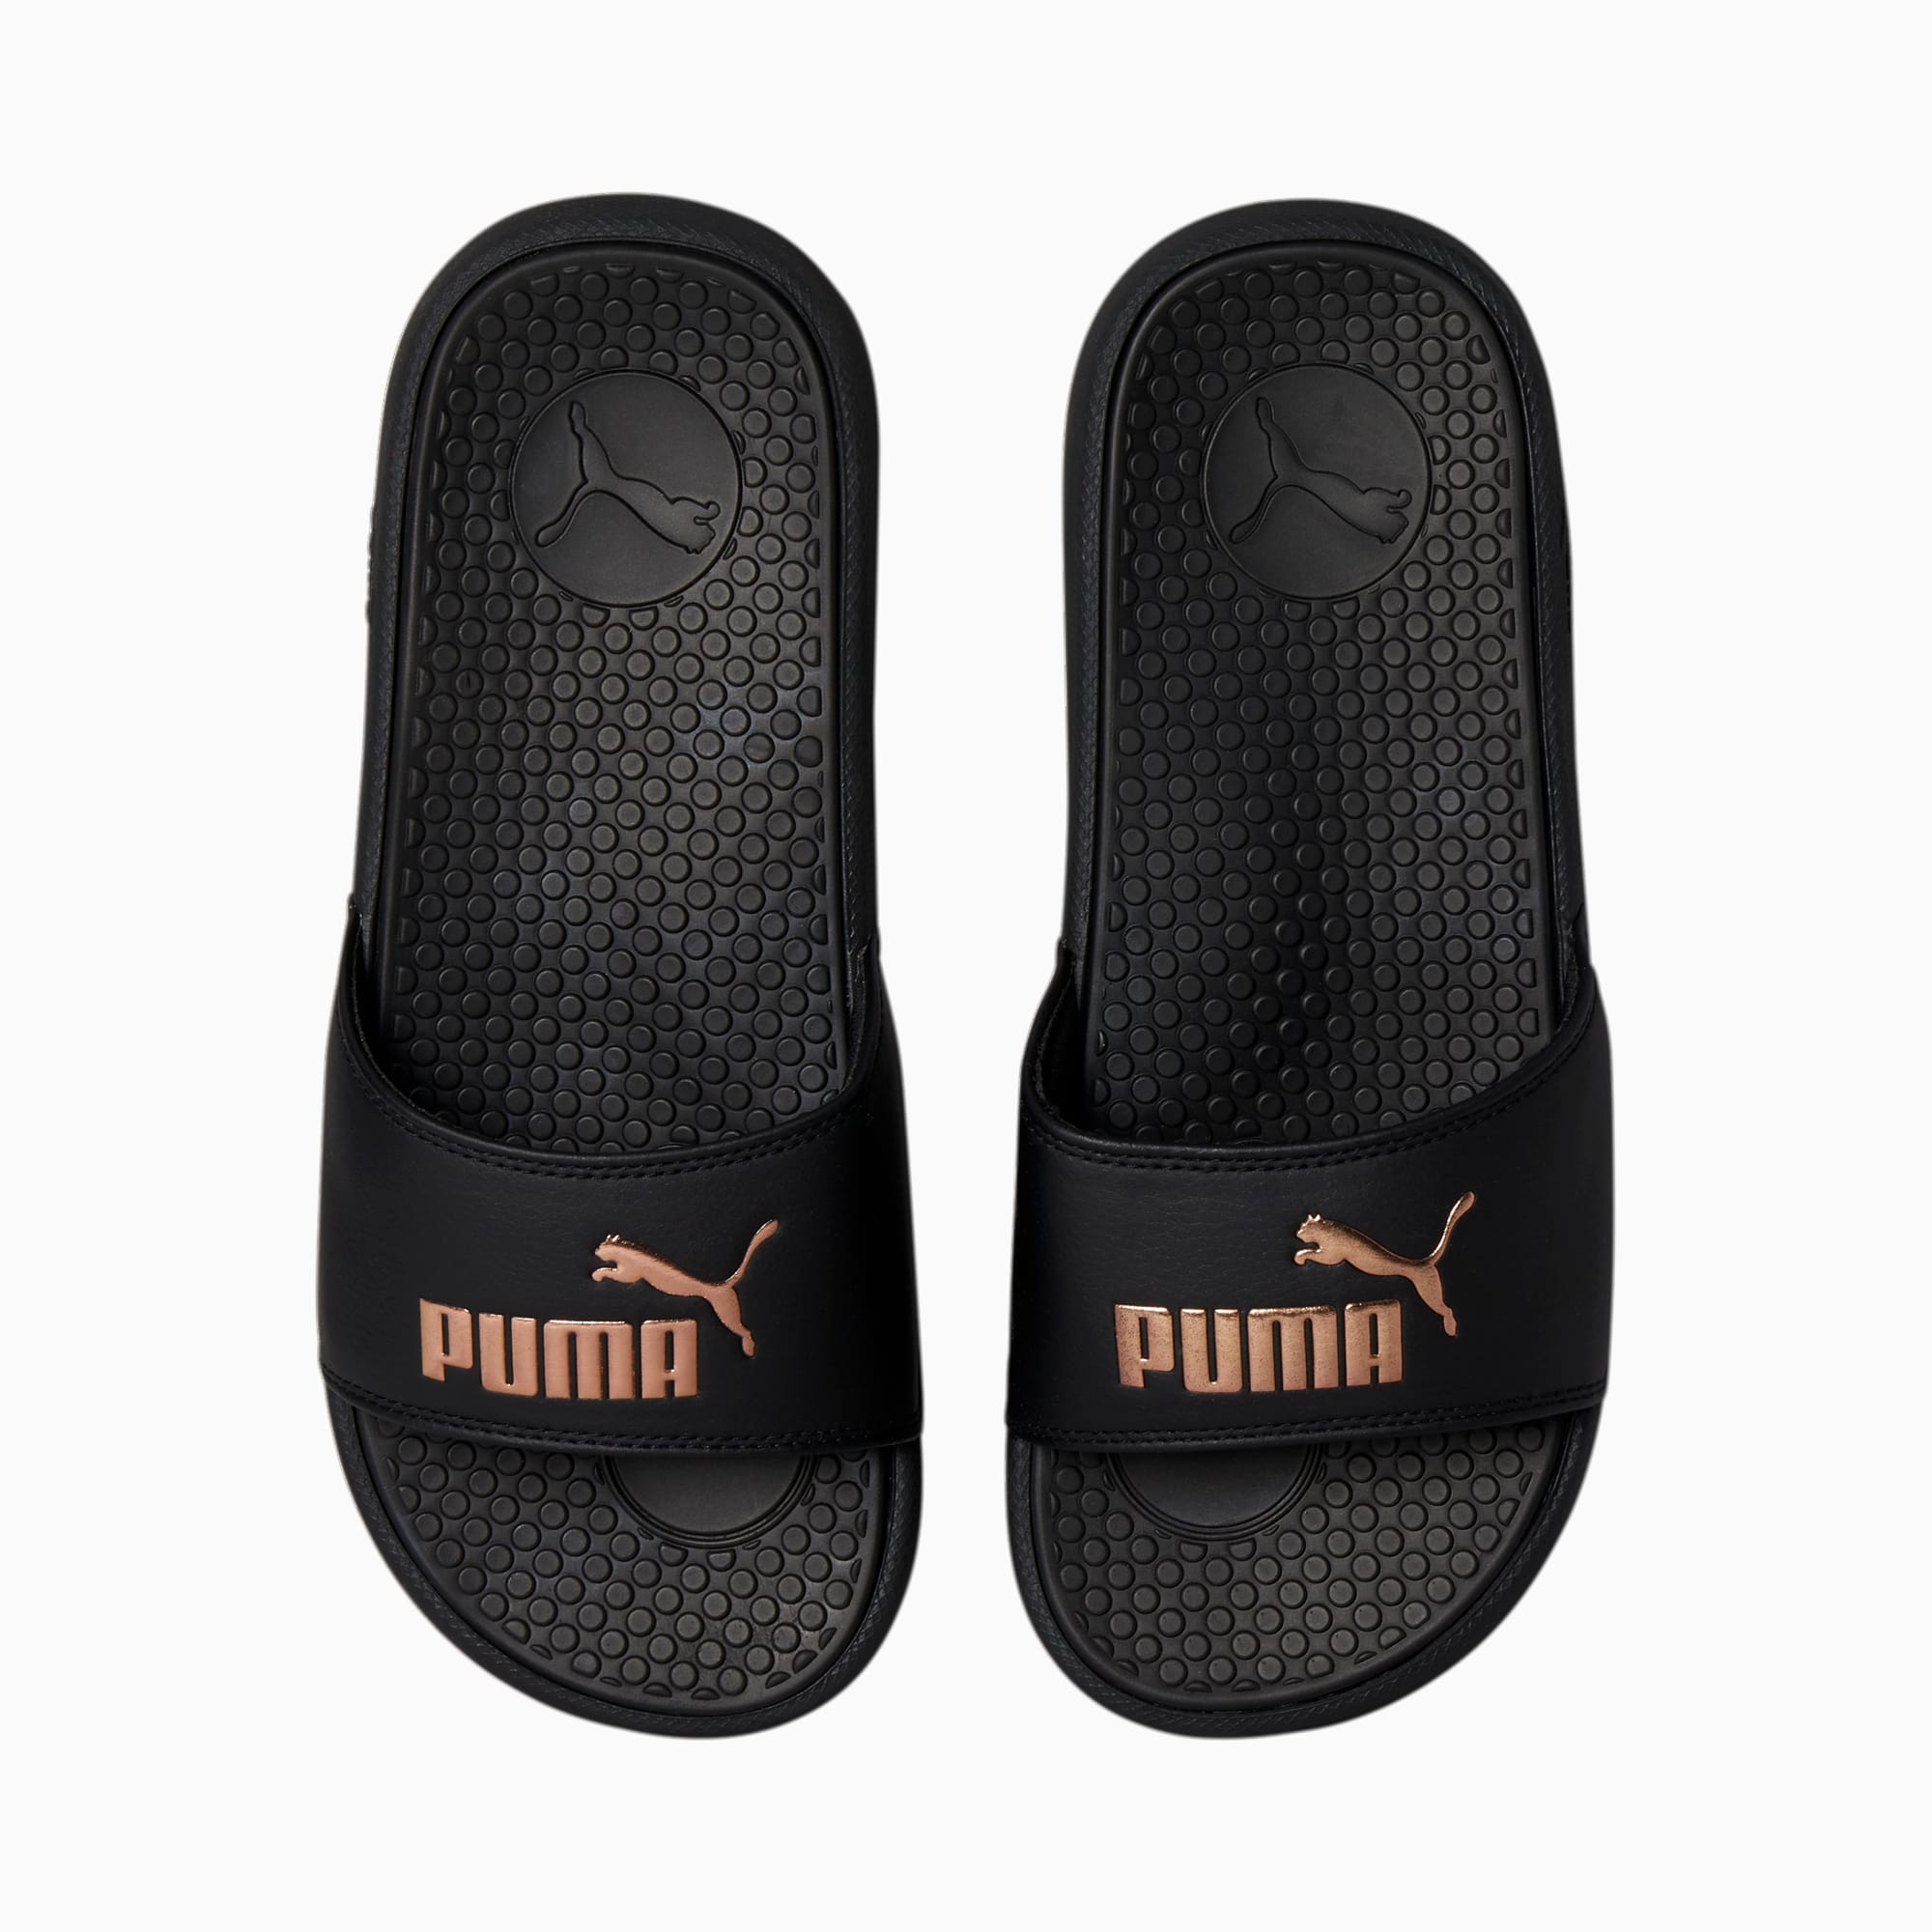 puma slides where to buy